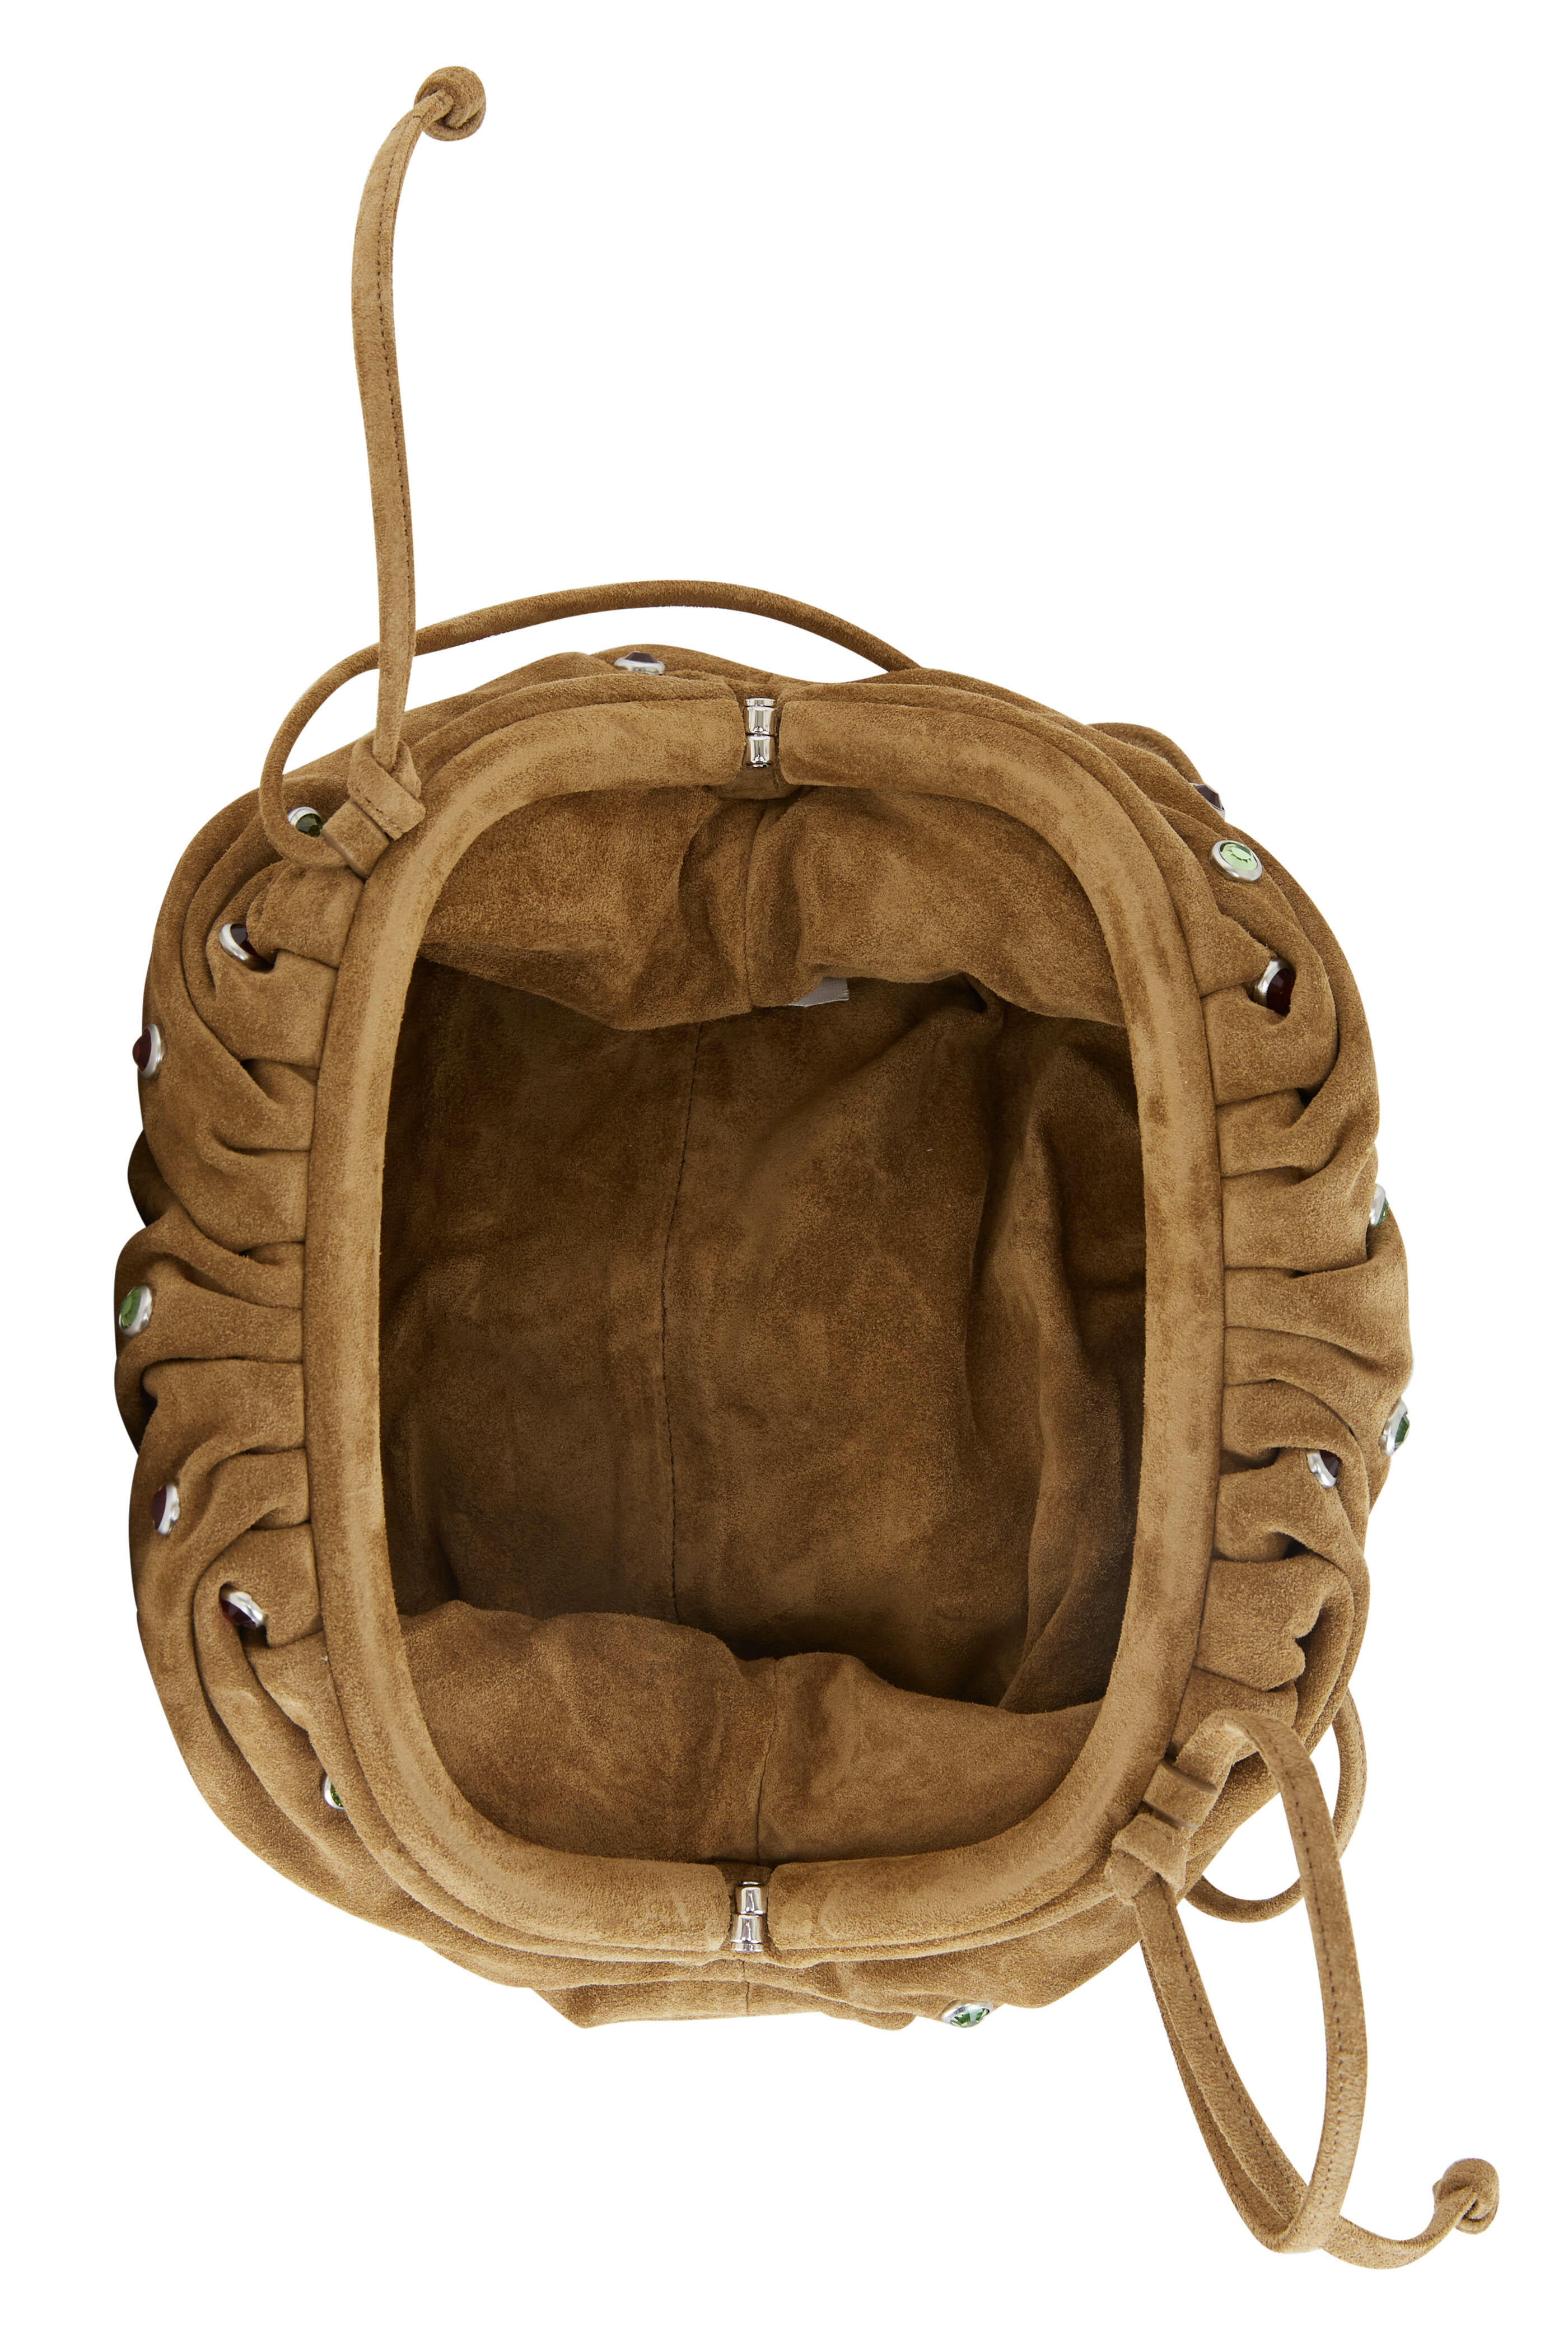 Tan Pouch mini leather clutch bag, Bottega Veneta